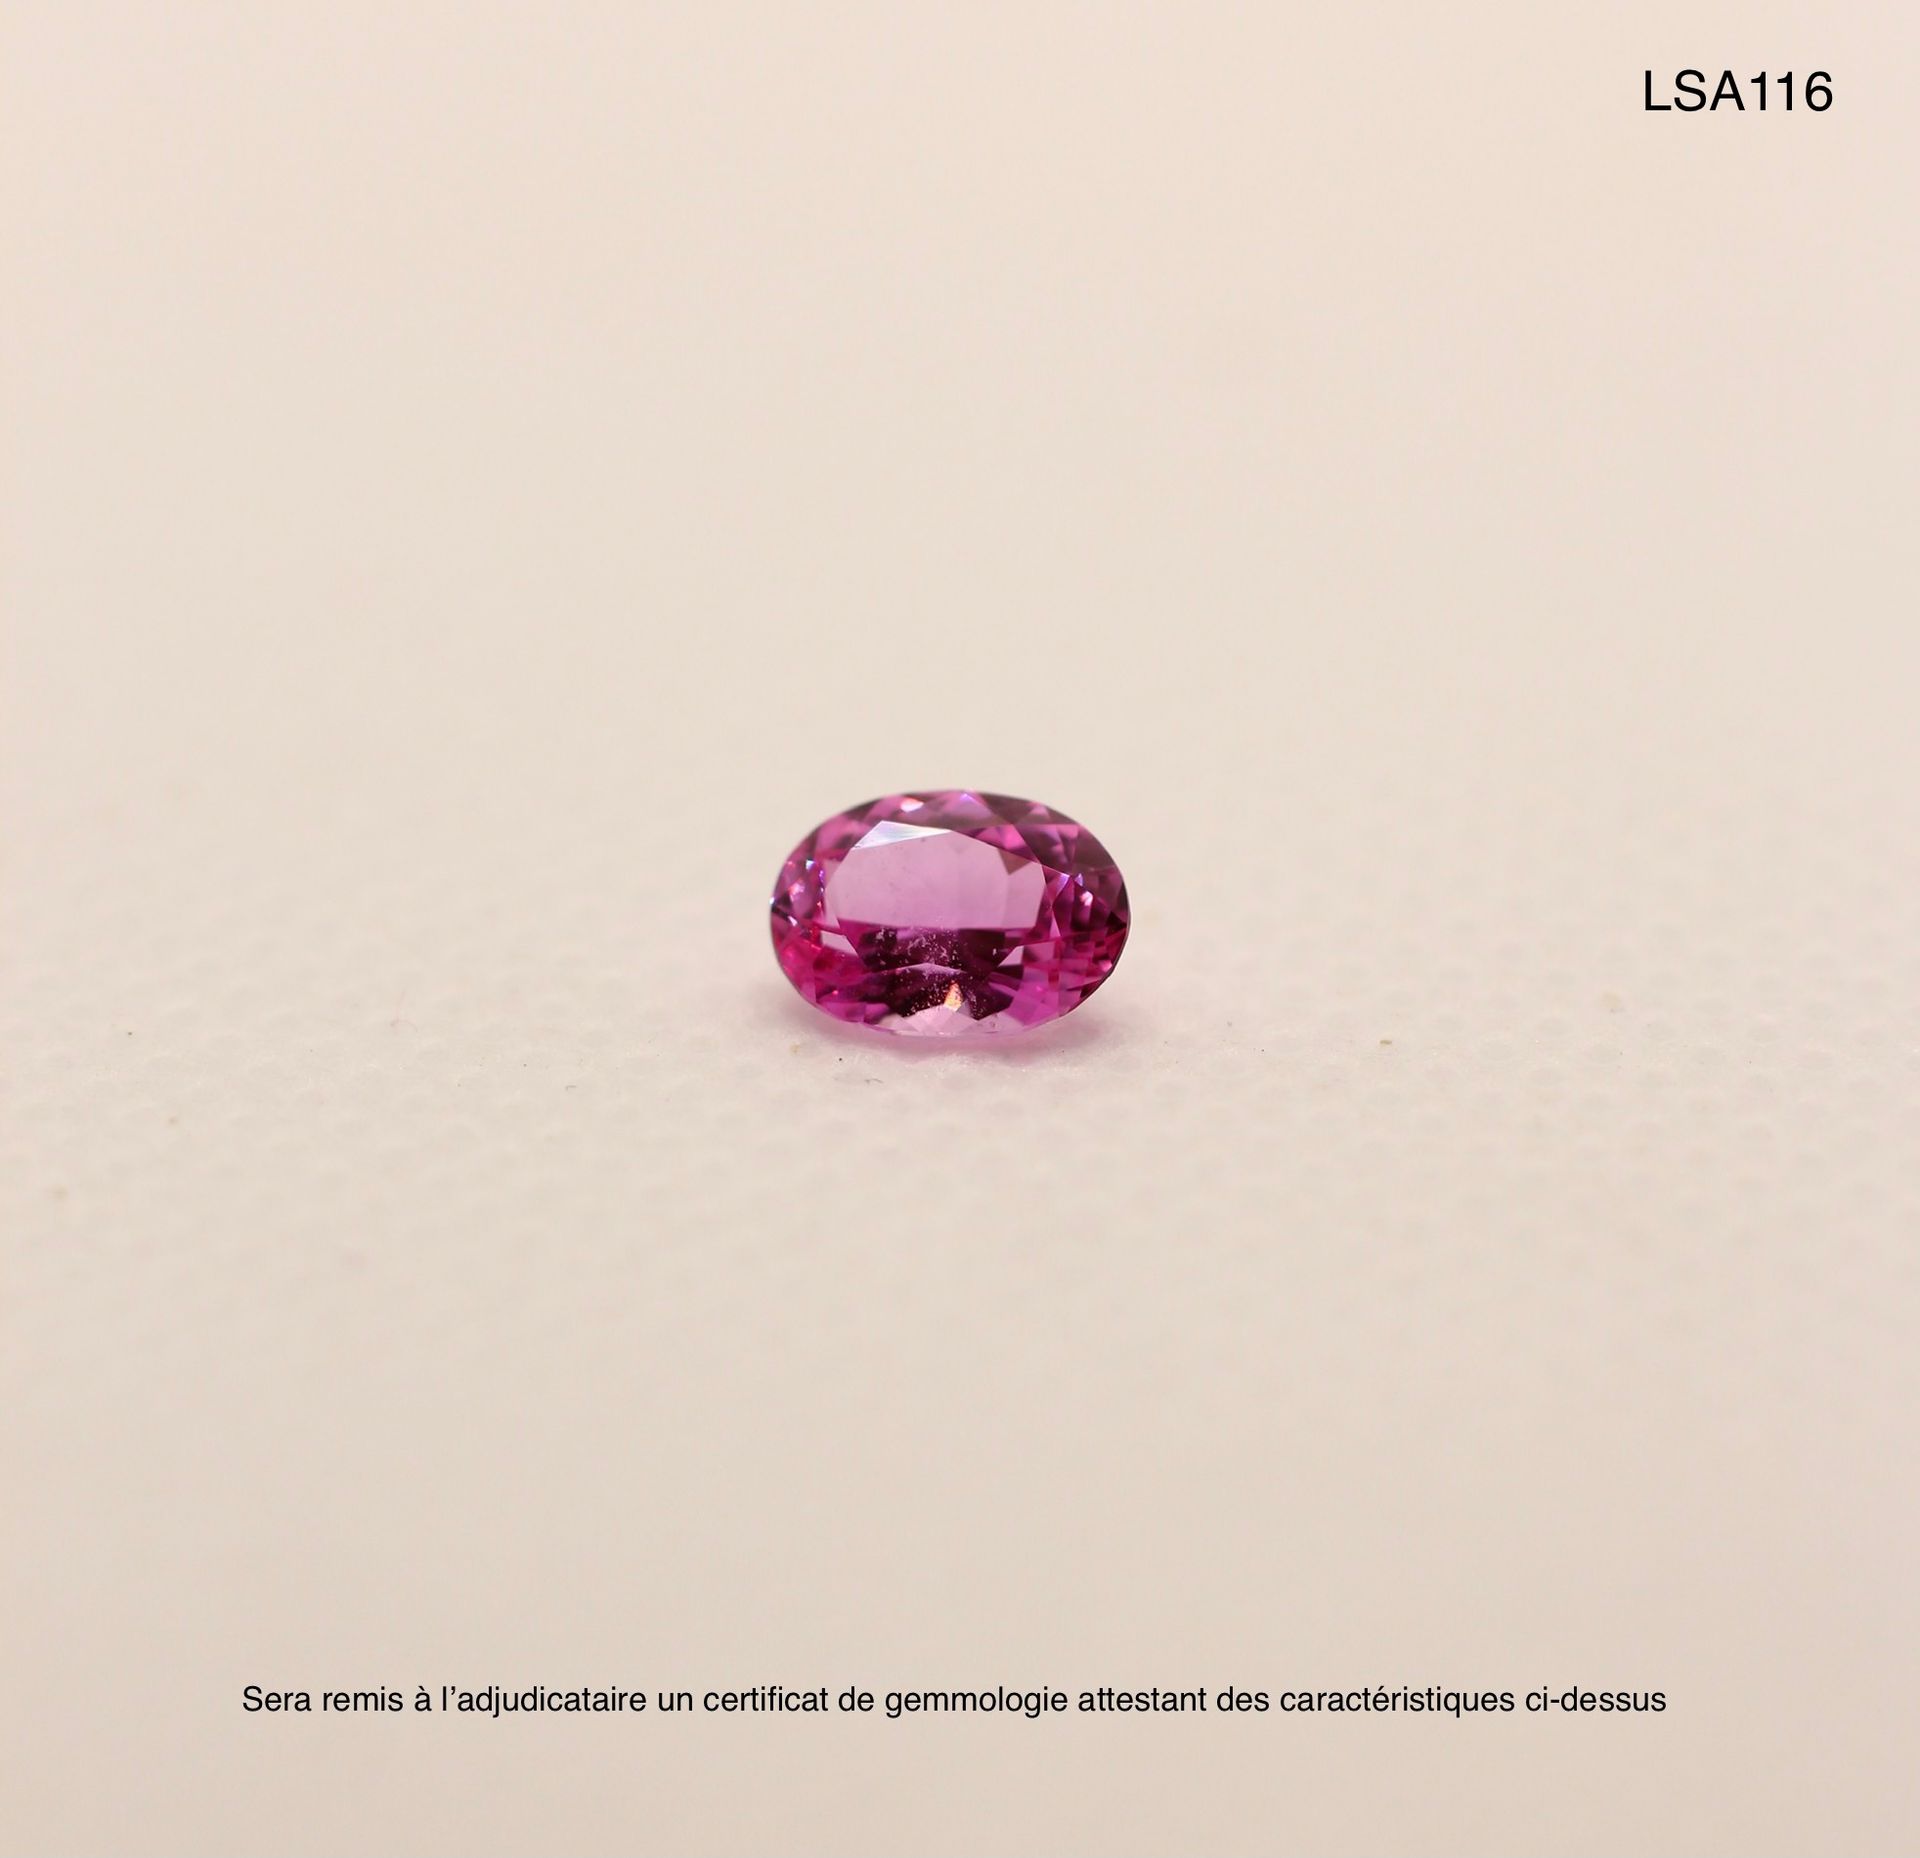 SAPHIRS TAILLÉS 拍品编号：LSA116

原产地: 马达加斯加

治疗: Ø

颜色：粉红色

形状: 椭圆形

尺寸：7mm x 5.2mm &hellip;